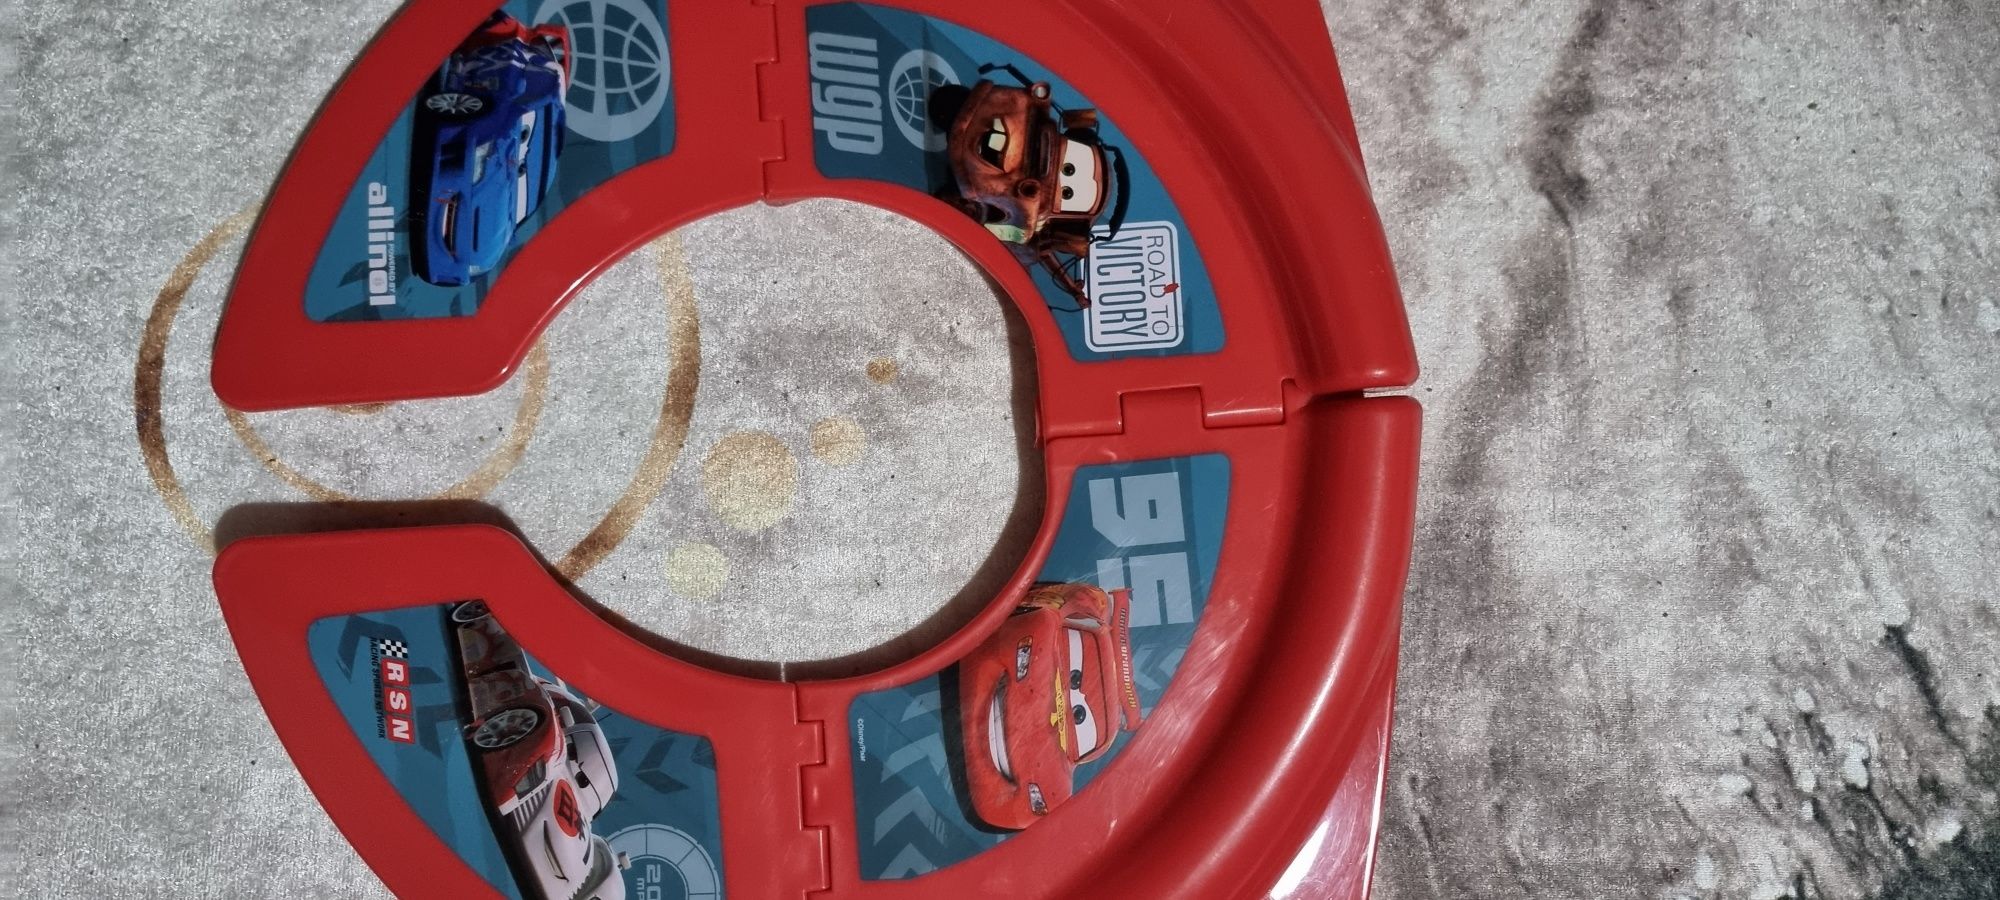 Детски адаптер за тоалетна чиния, сгъваем с мотиви на Дисни.